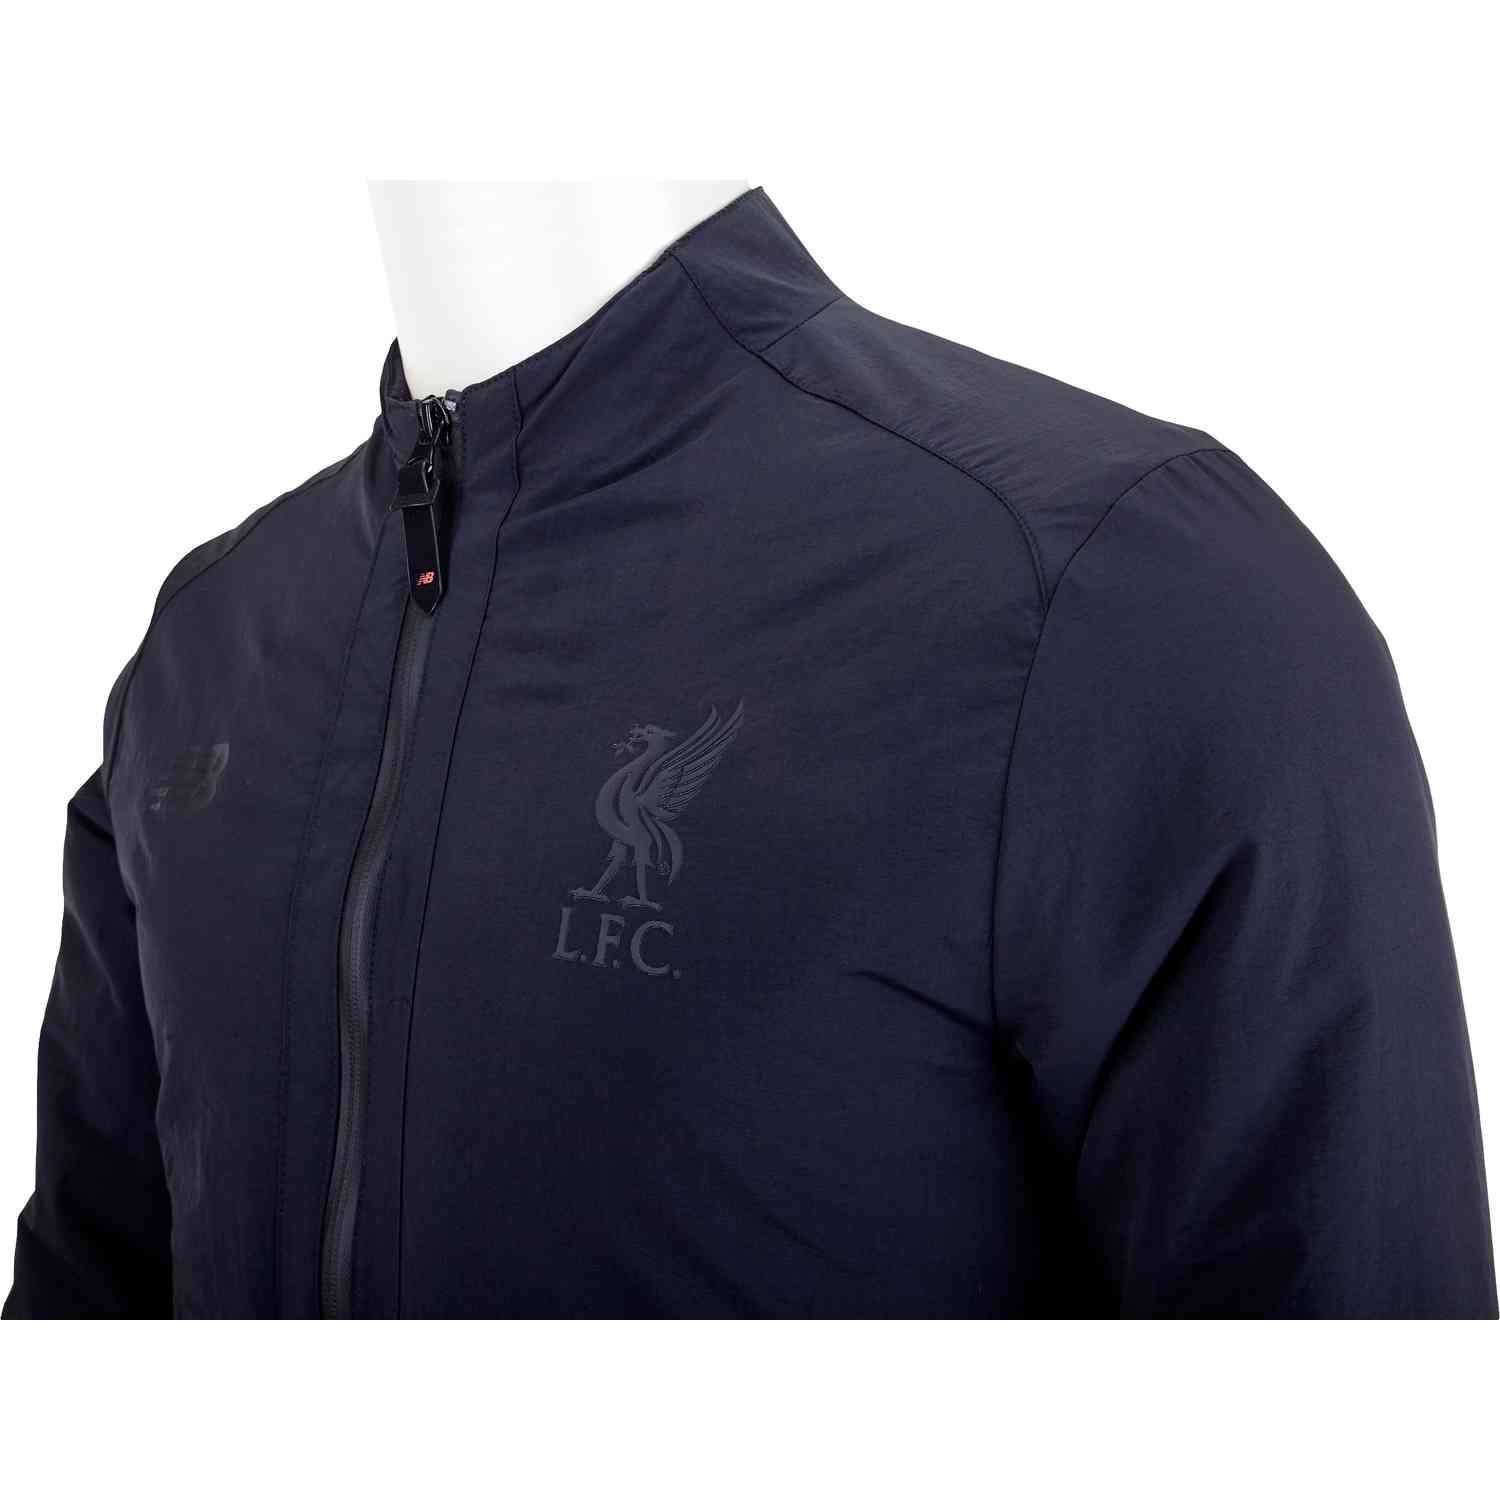 liverpool fc new balance jacket